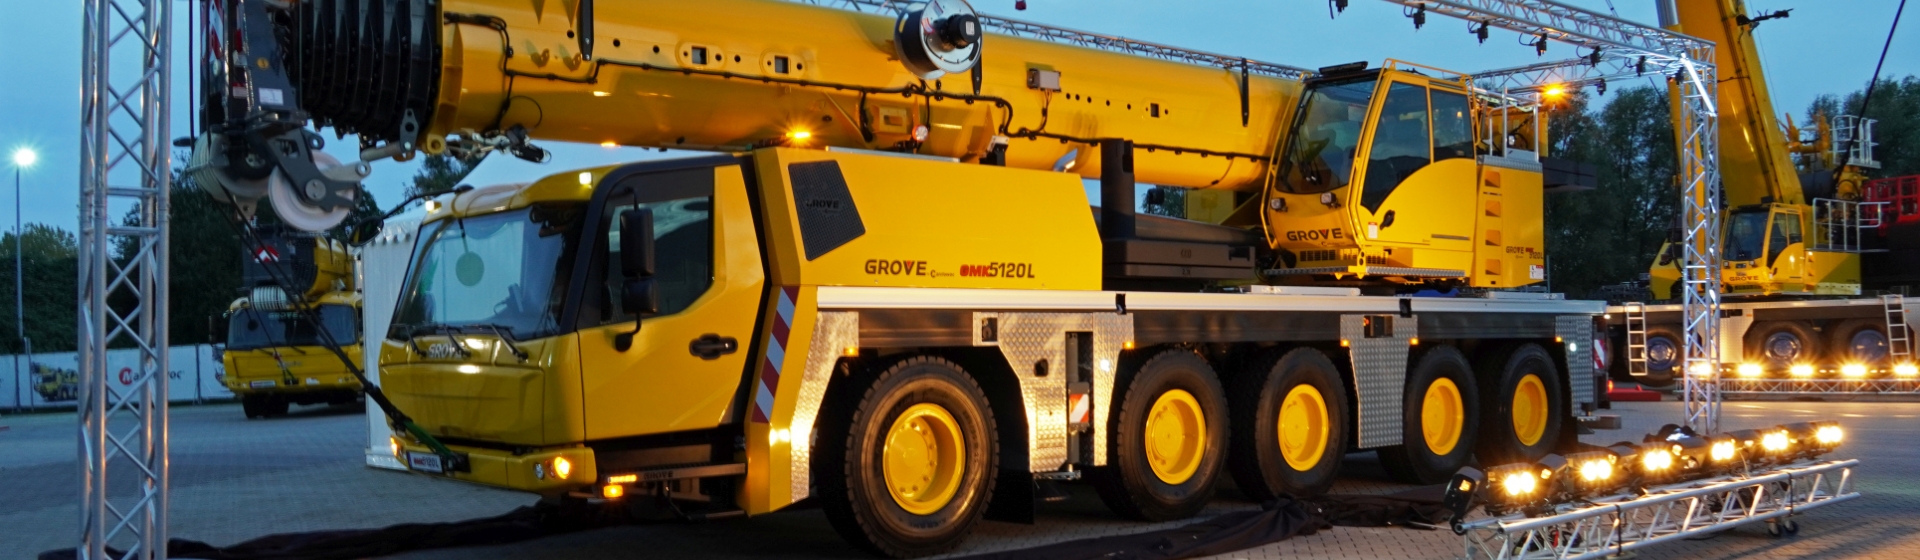 Grove-presents-two-new-five-axle-all-terrain-cranes-at-customer-events-in-Wilhelmshaven--Grove-GMK5120L(2).jpg